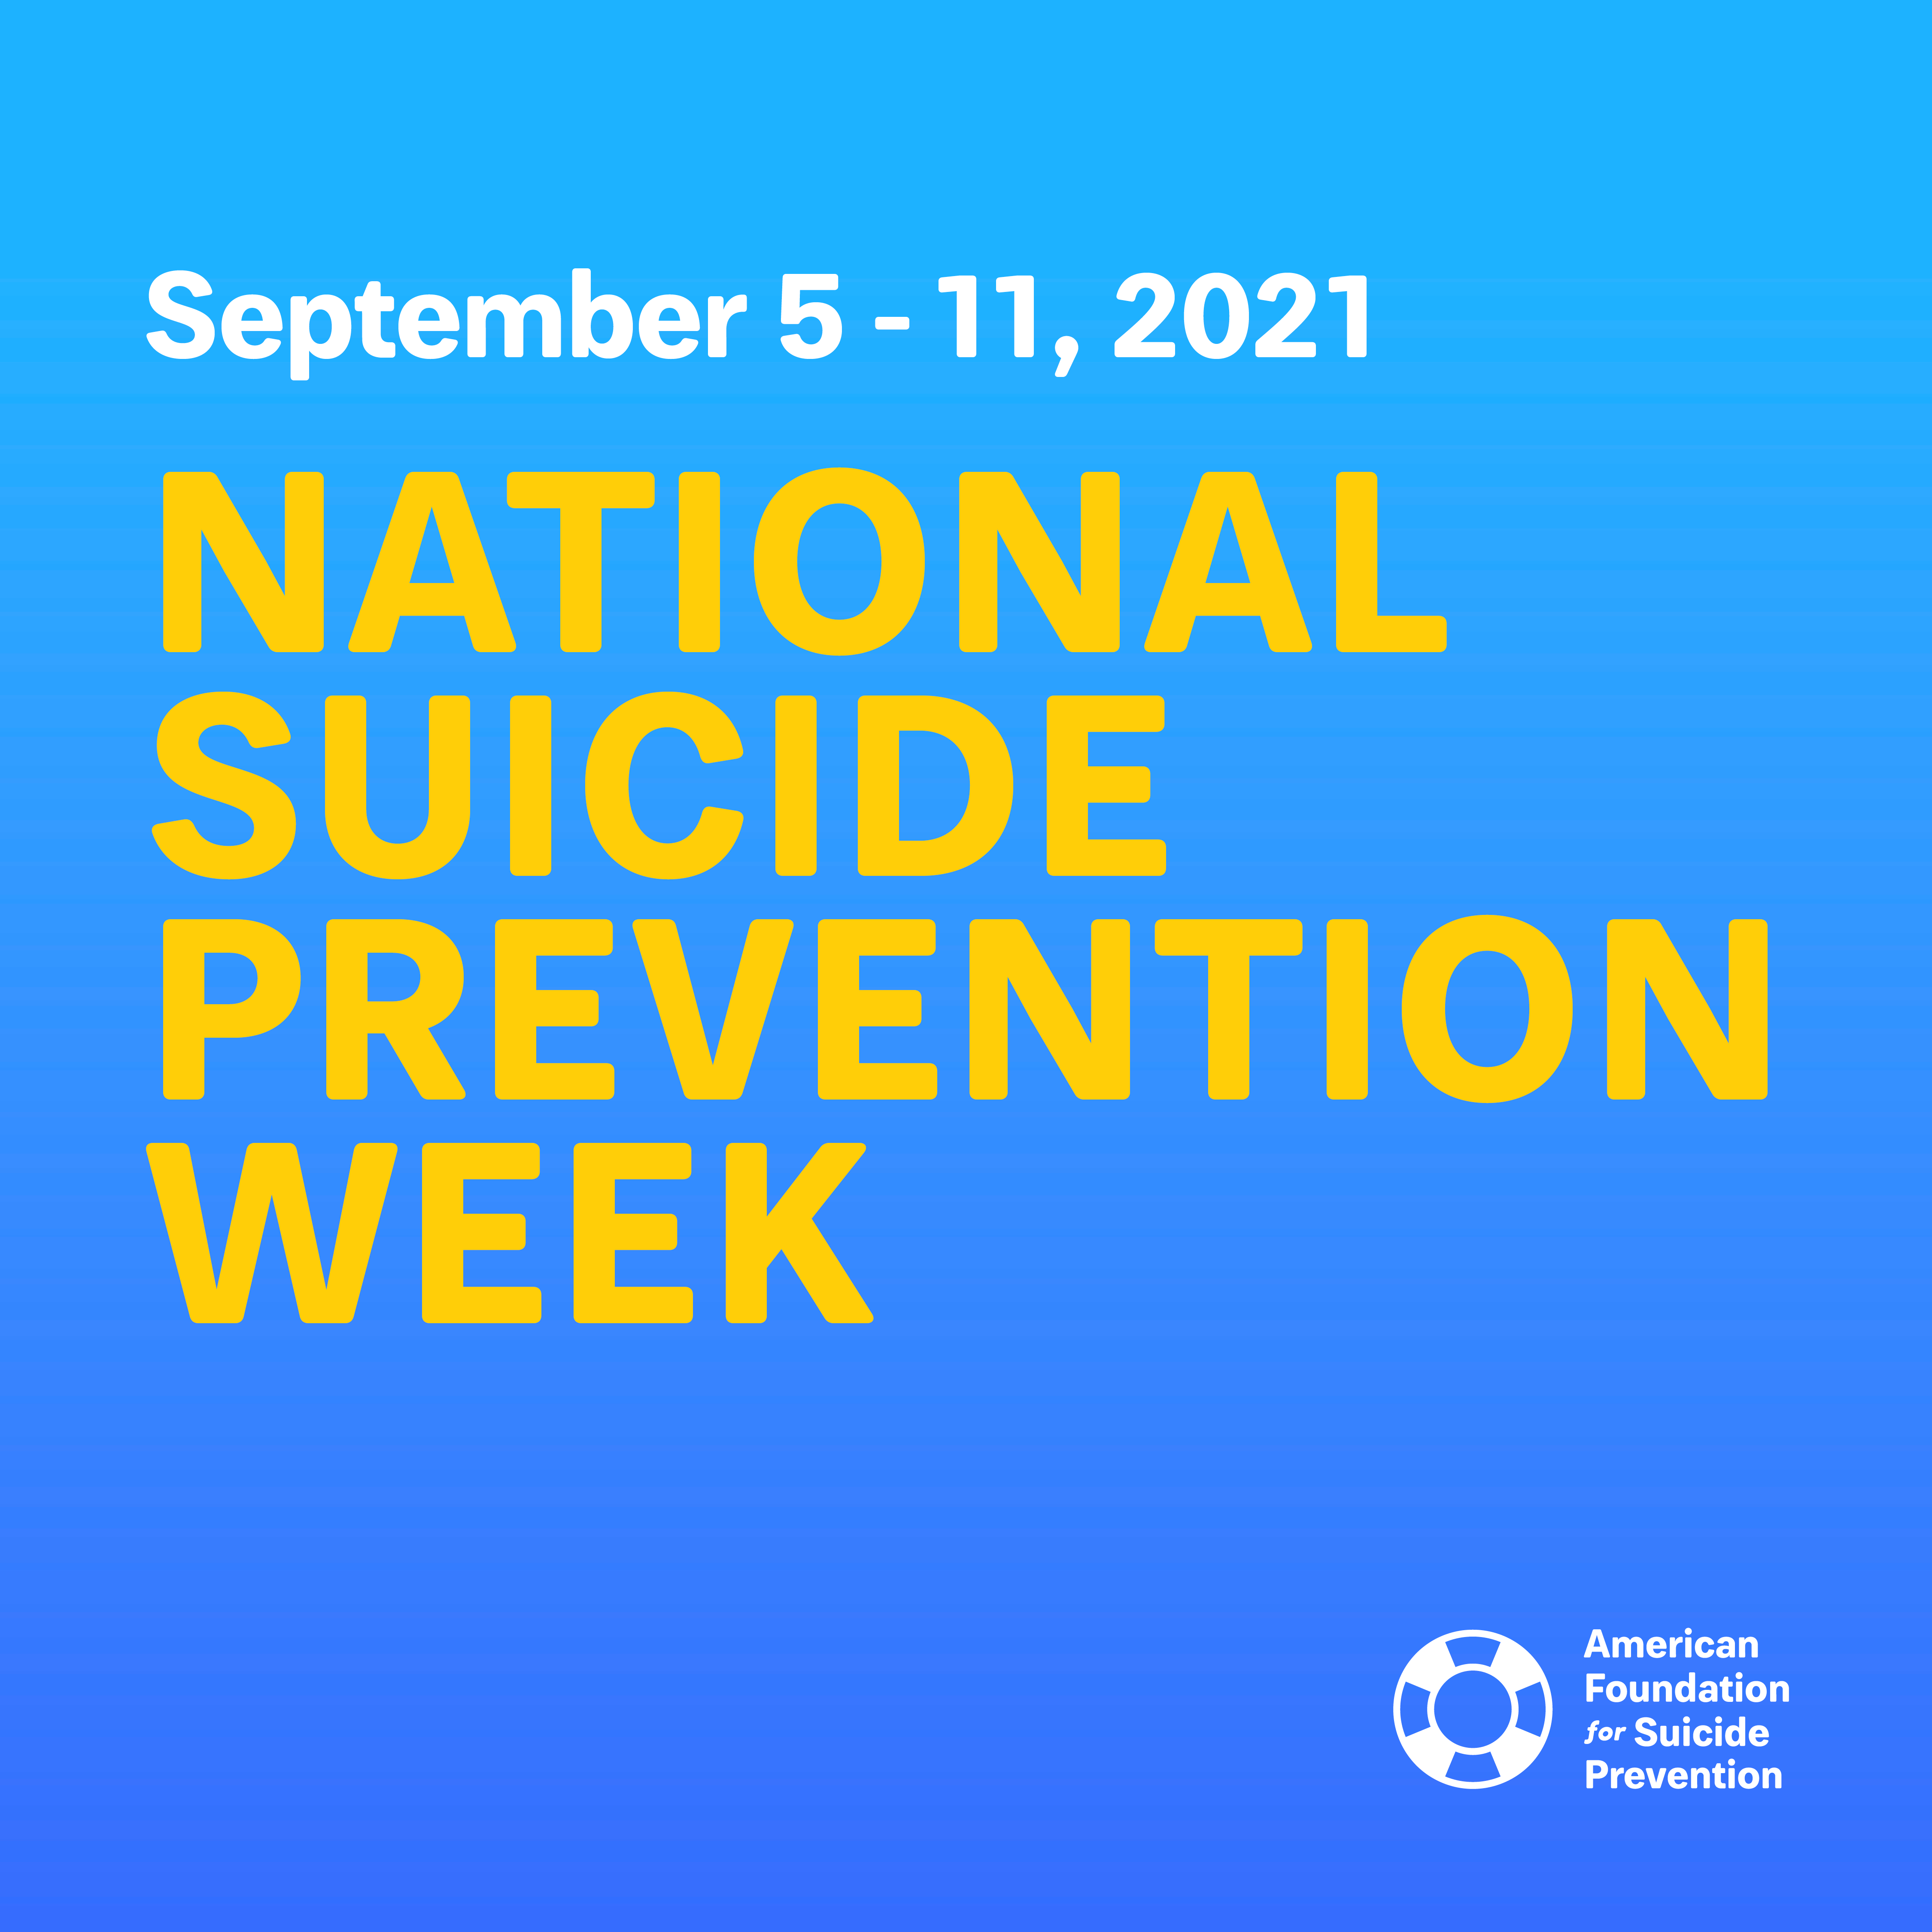 https://ideapublicschools.org/wp-content/uploads/2021/09/Suicide-Prevention-Week-2021.png